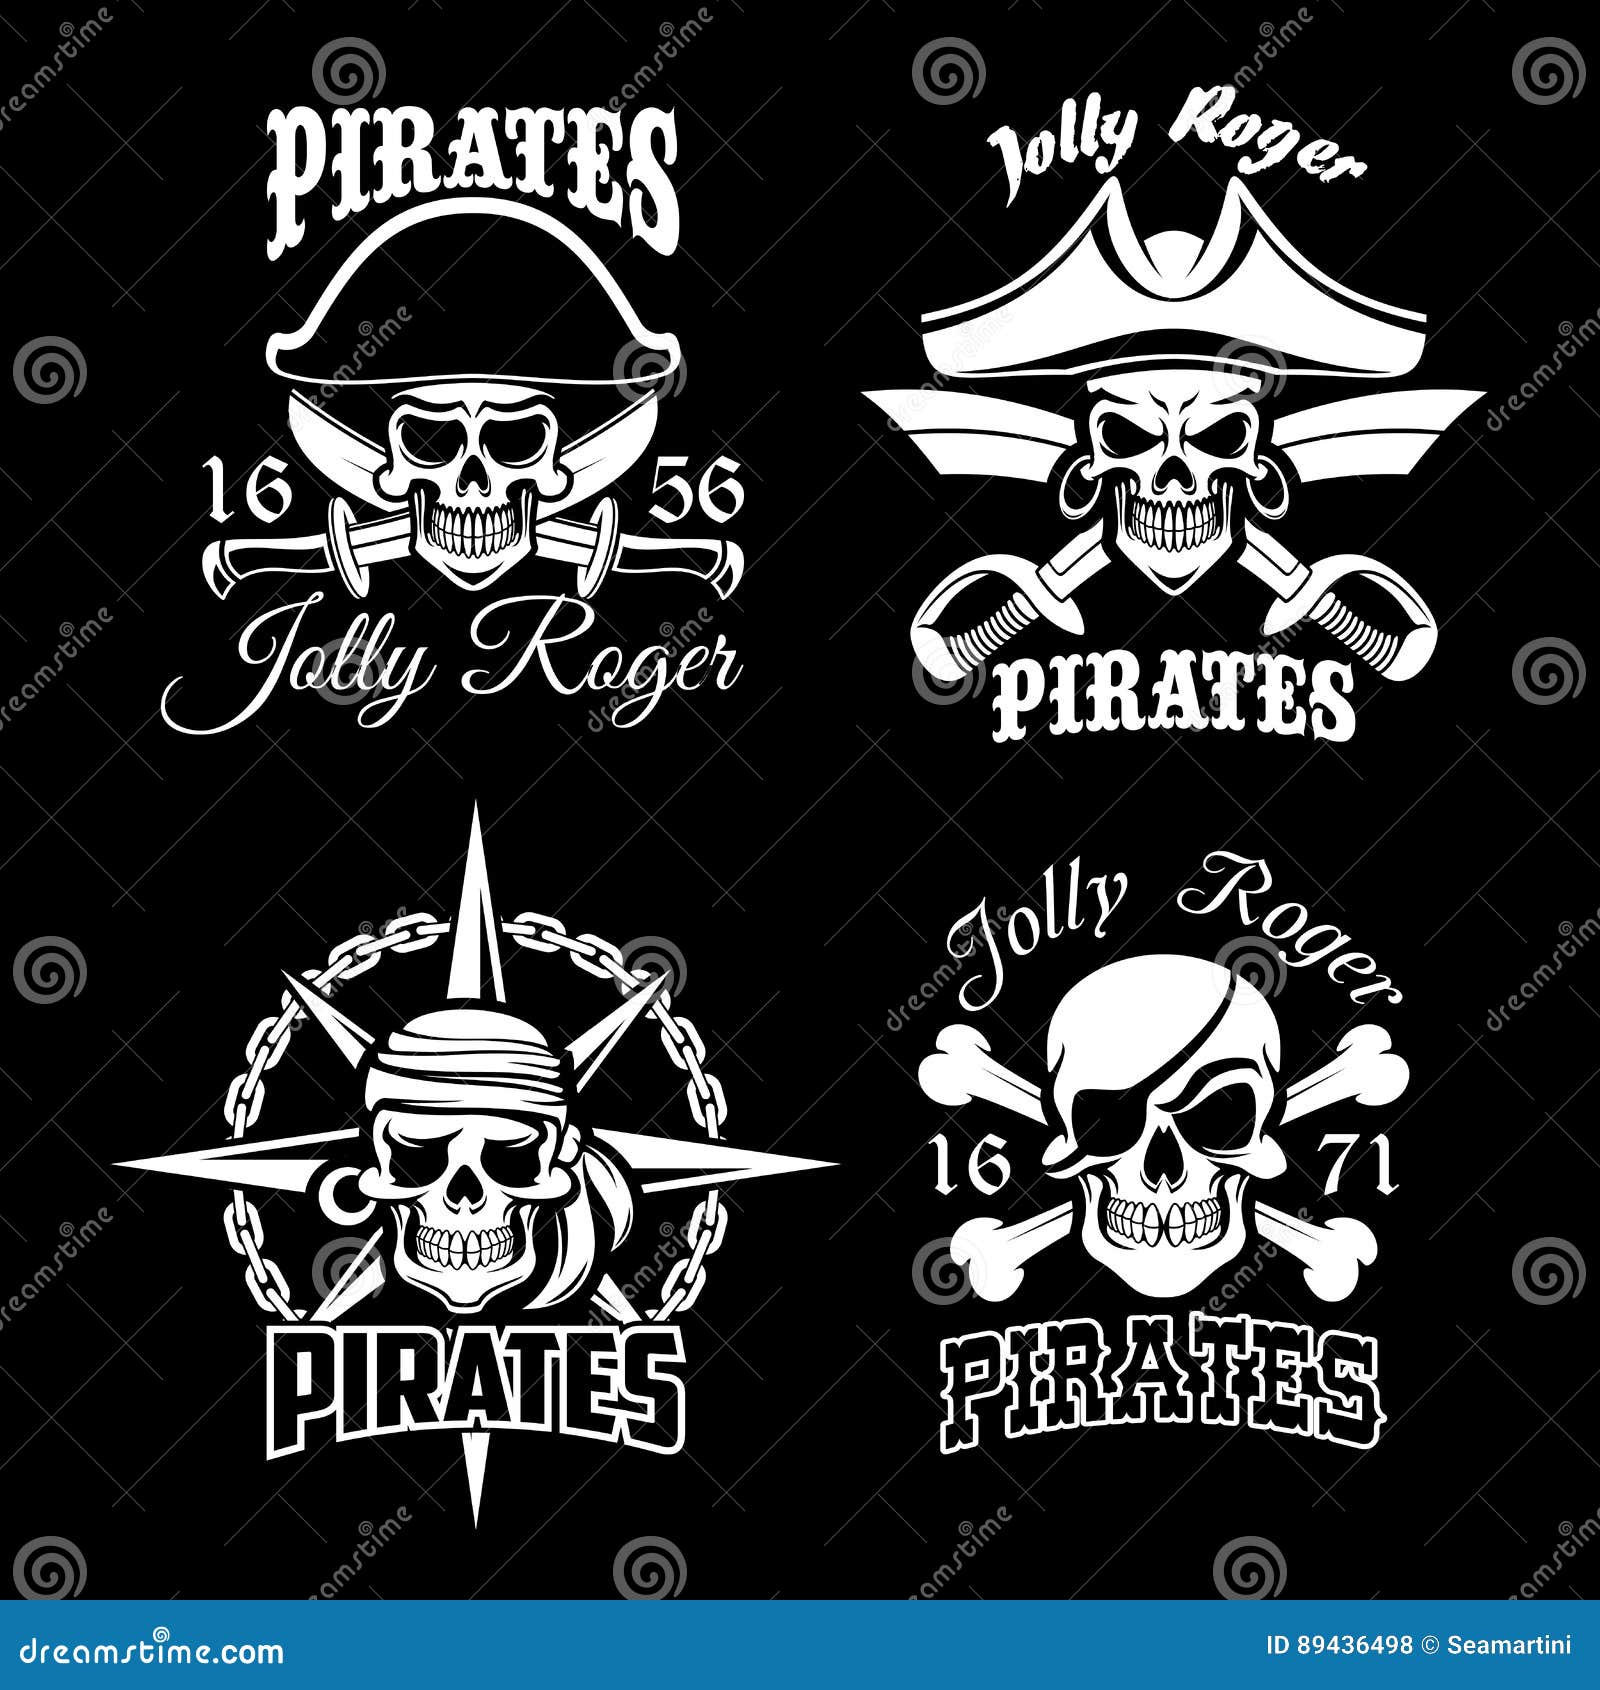 PirateThemed Tattoo Ideas Skulls Ships and More  TatRing